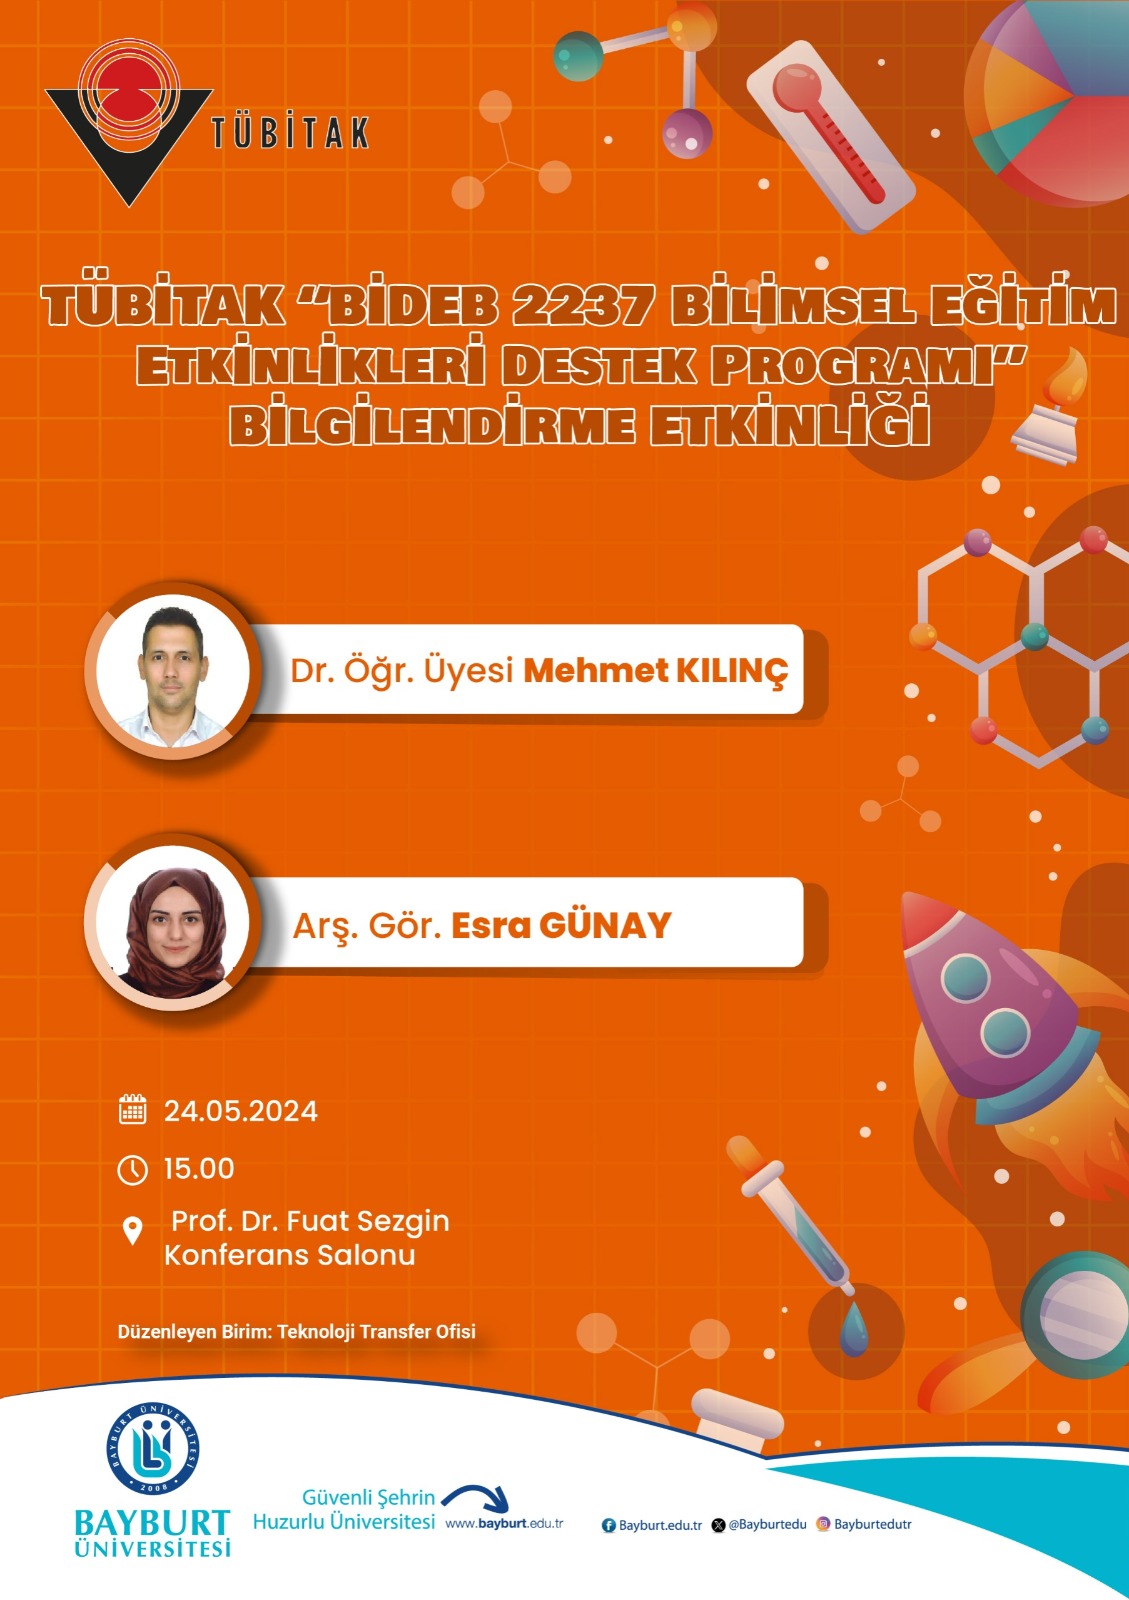 Tübitak “bideb 2237 Scientific Education Activities Support Program” Information Event-2